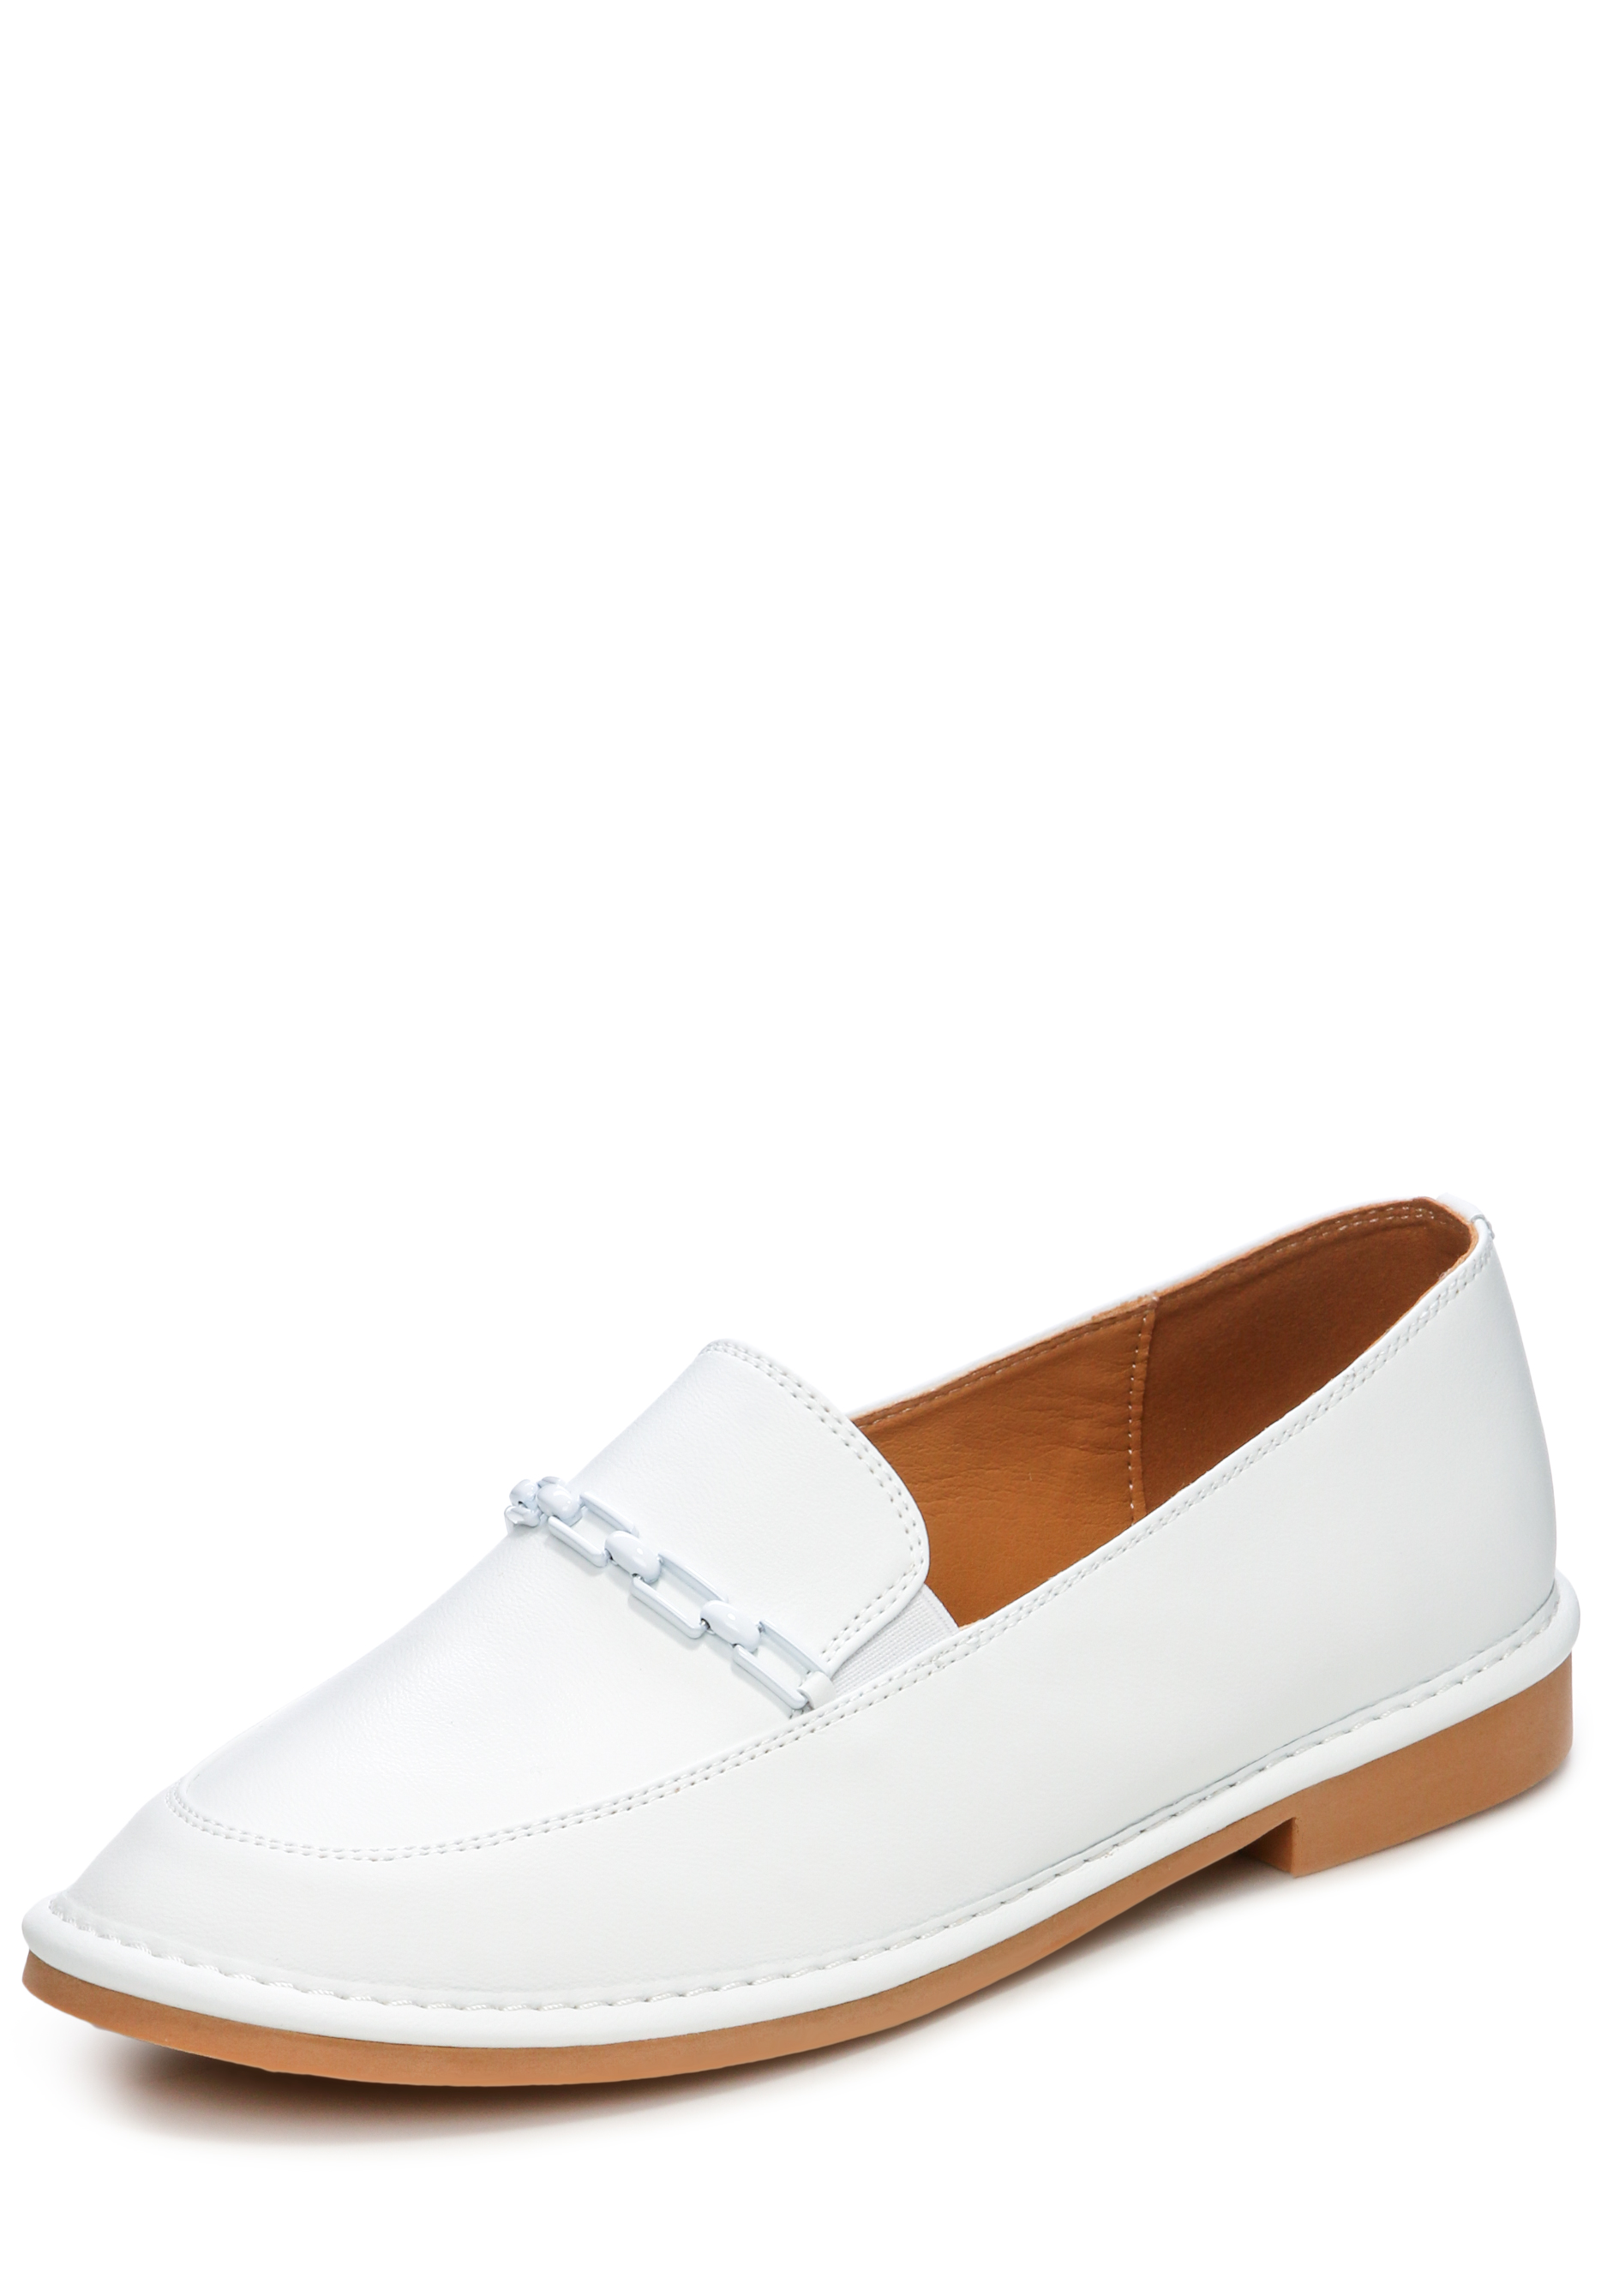 Туфли женские "Клео" KUMFO, цвет белый, размер 37